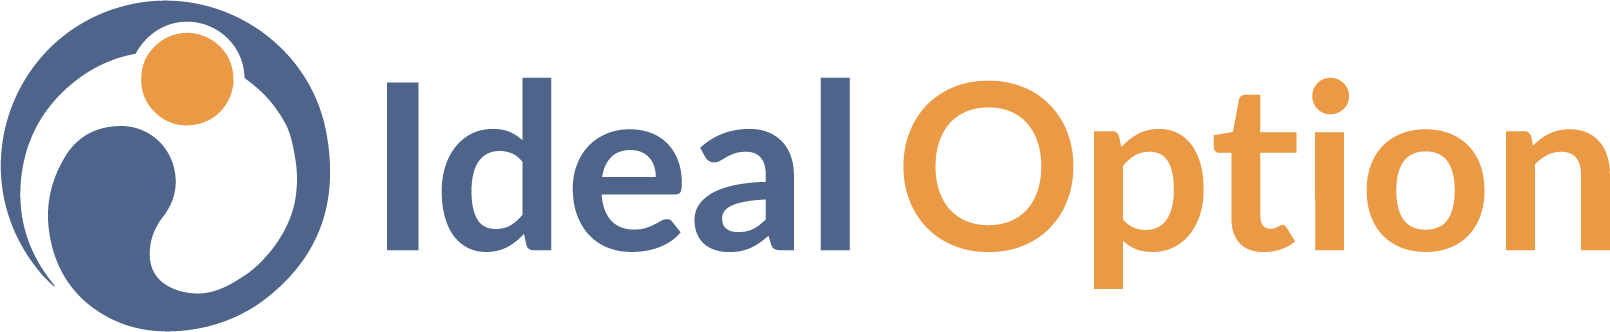 Virtual Clinic - Ideal Option